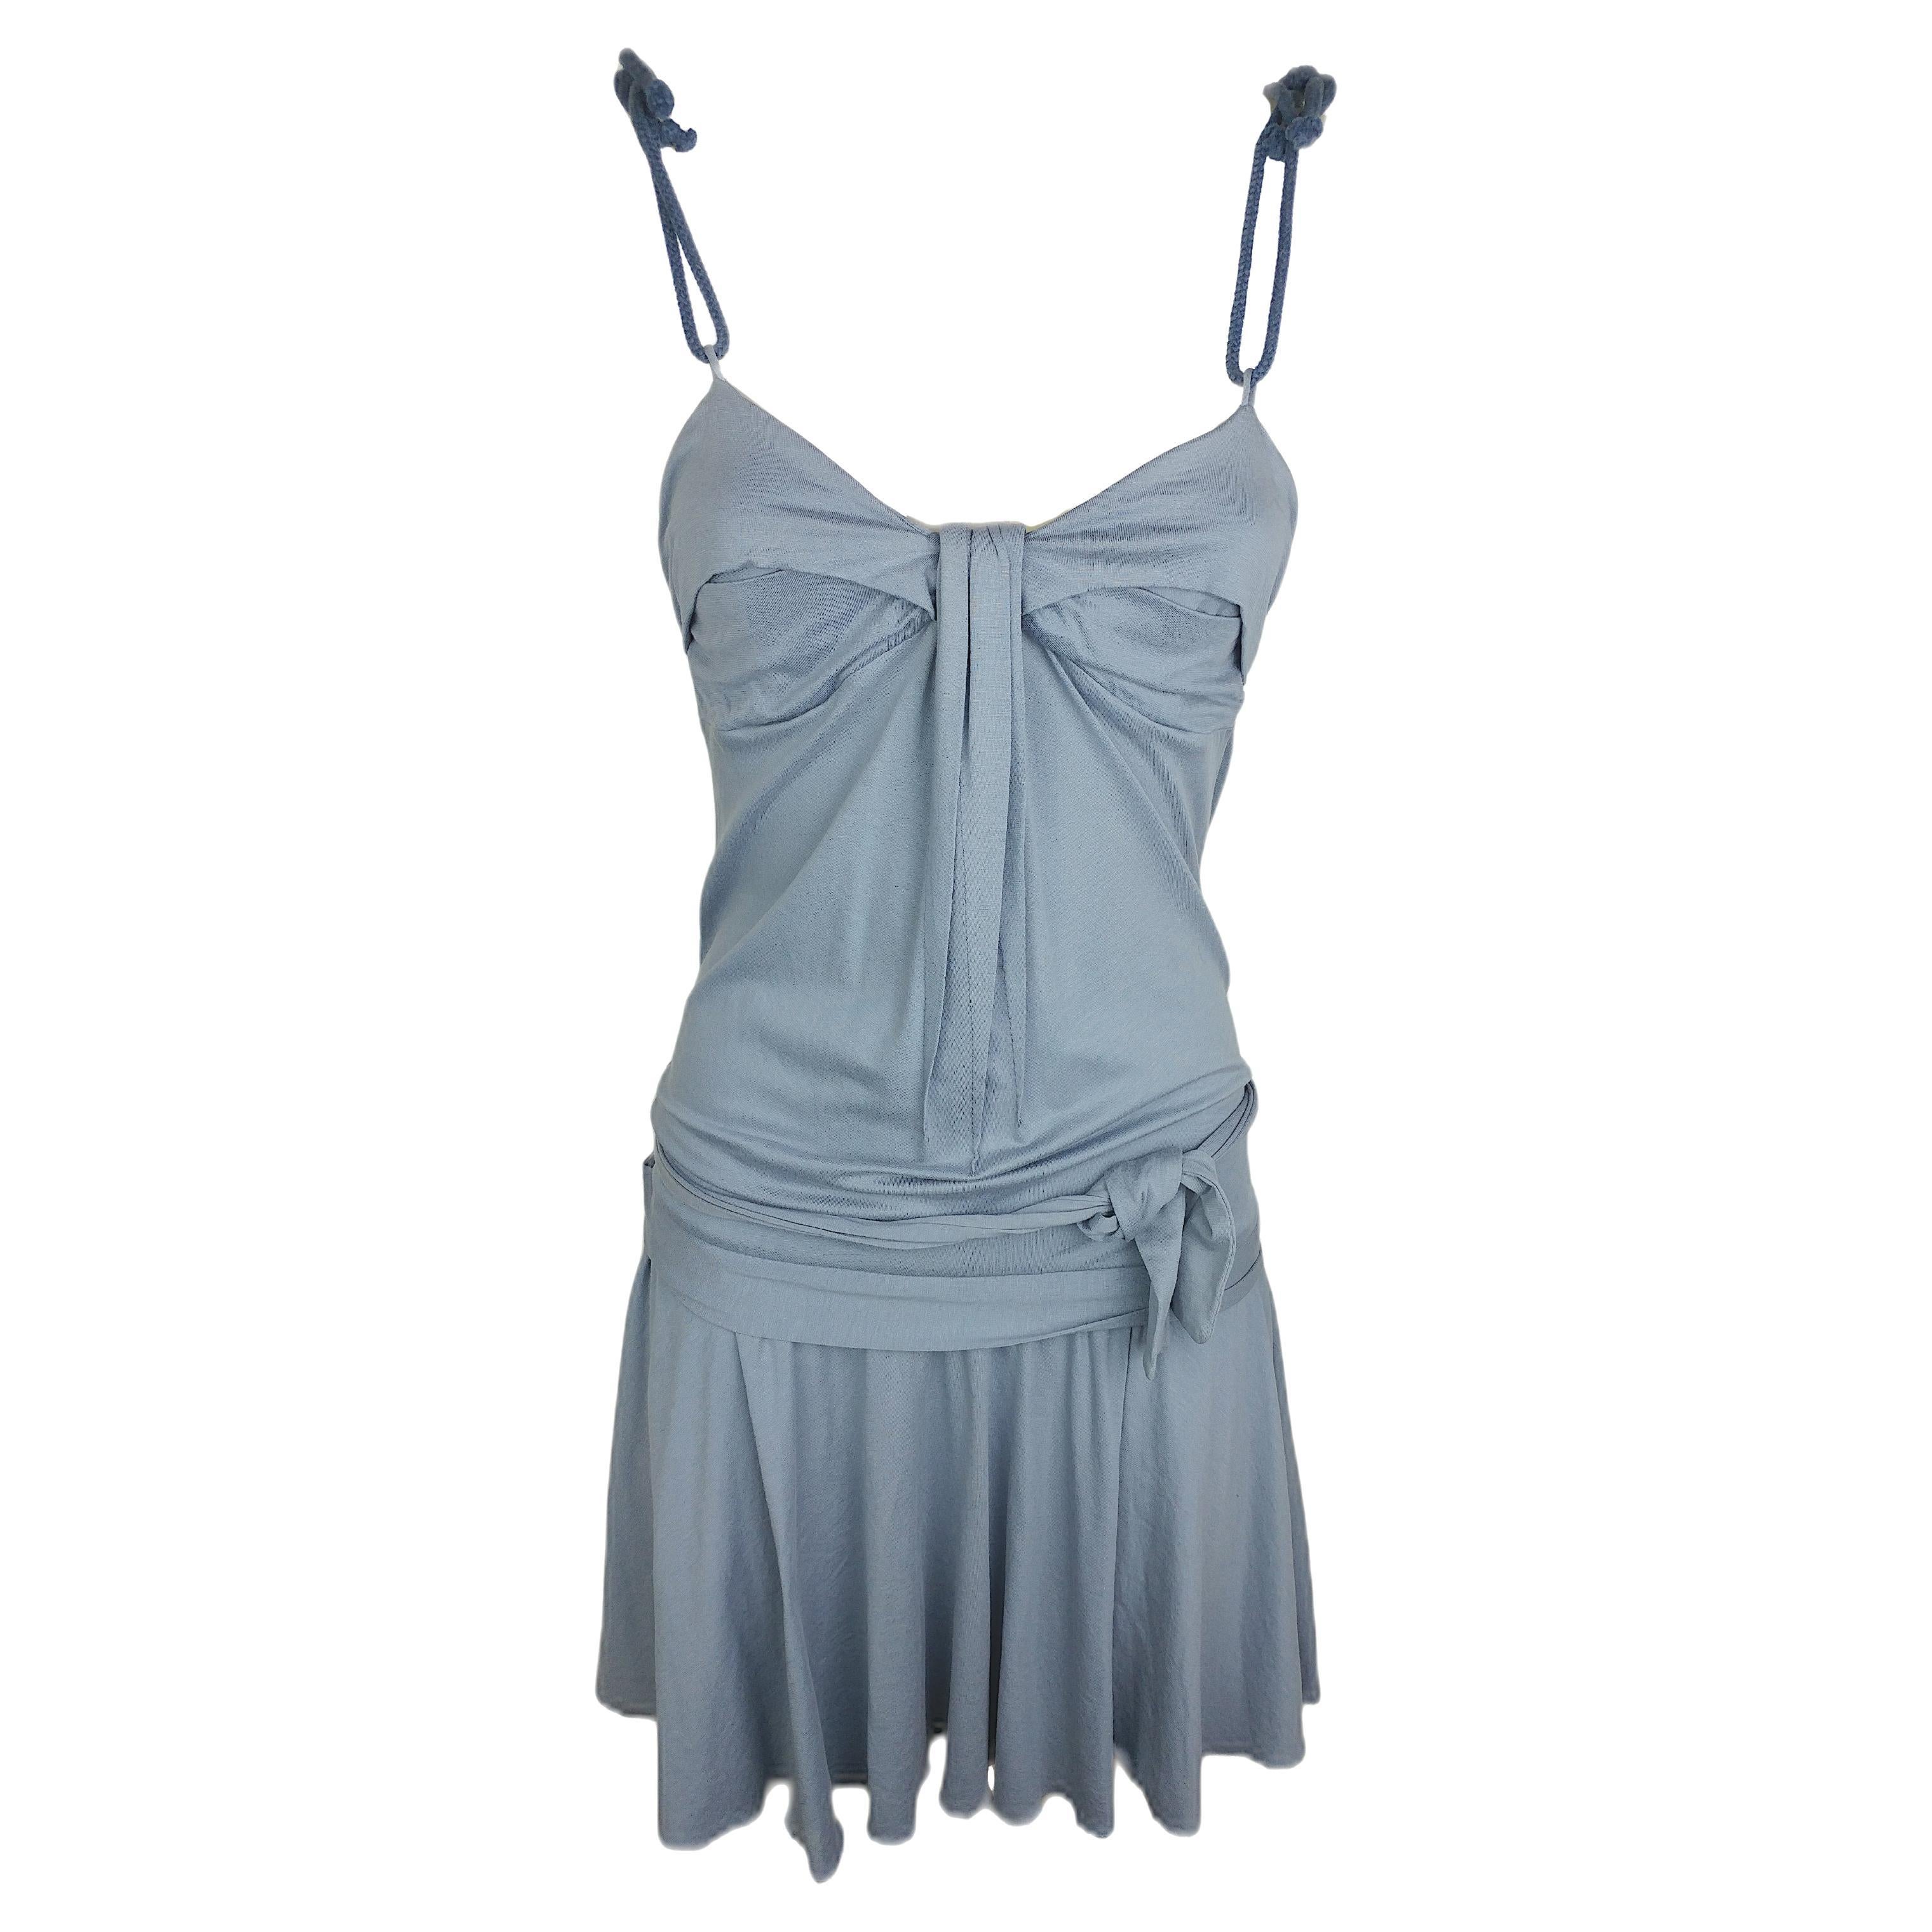 EMPORIO ARMANI – SS '08 Turquoise Sleeveless Dress with Circle Skirt  Size 4US